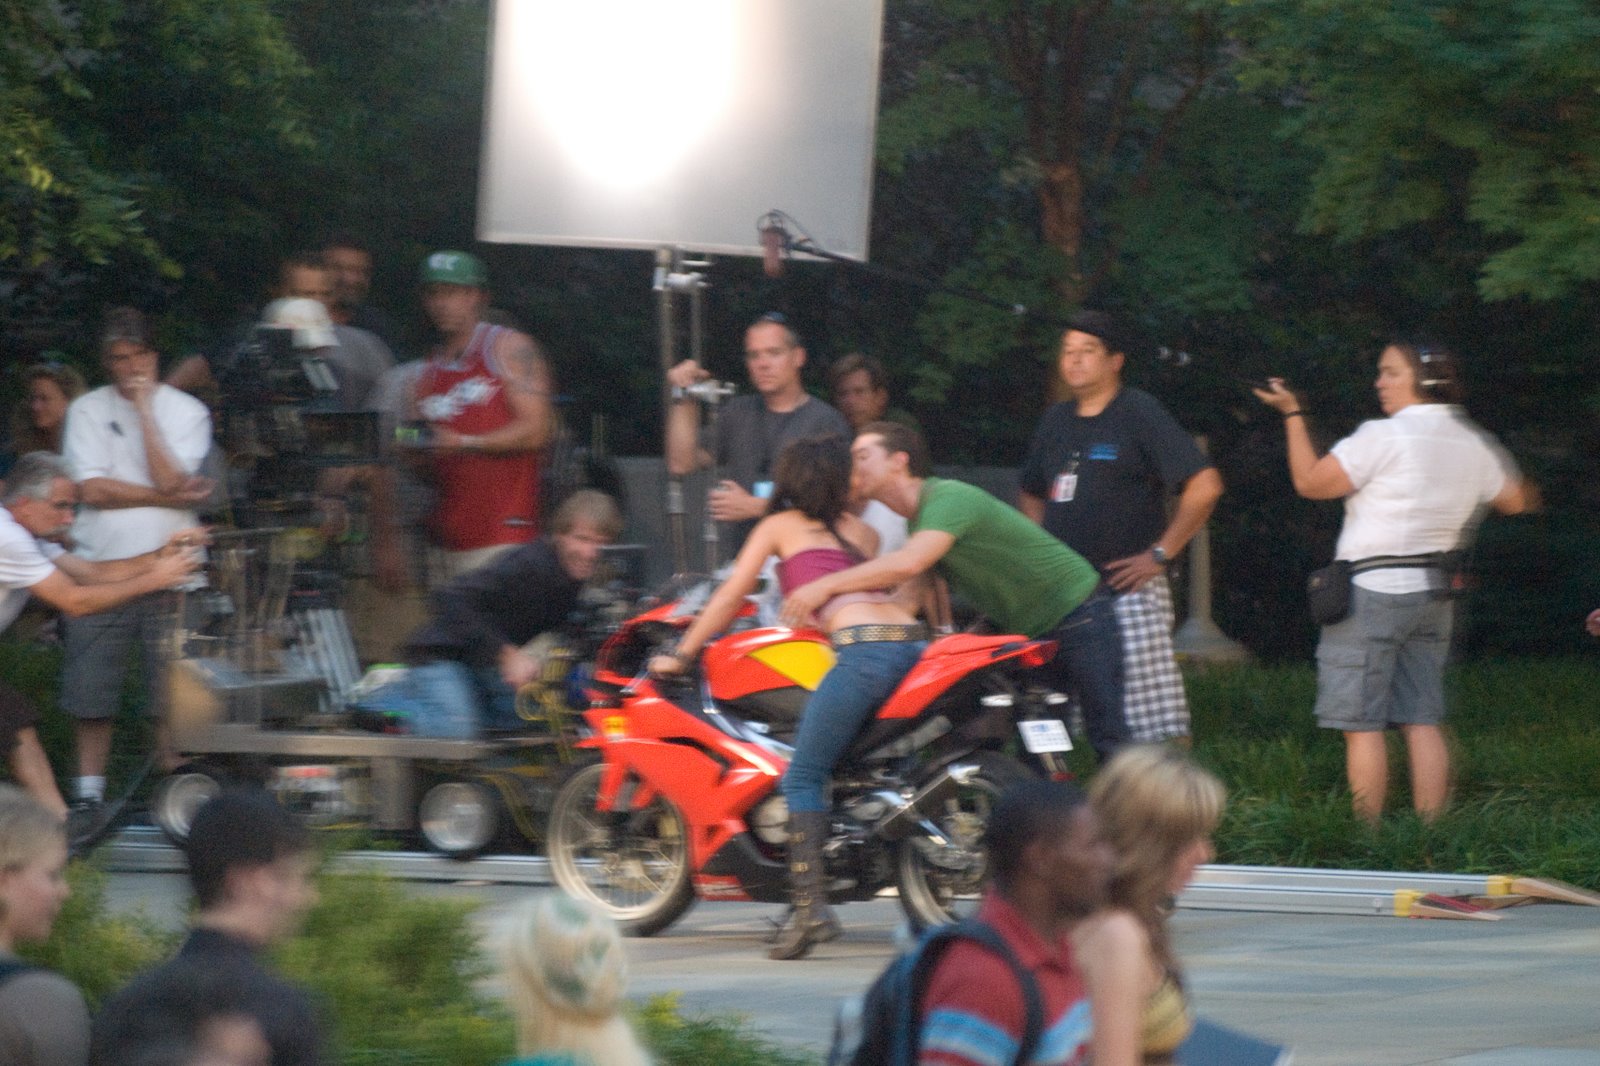 Megan Fox in Transformers: Revenge of the Fallen